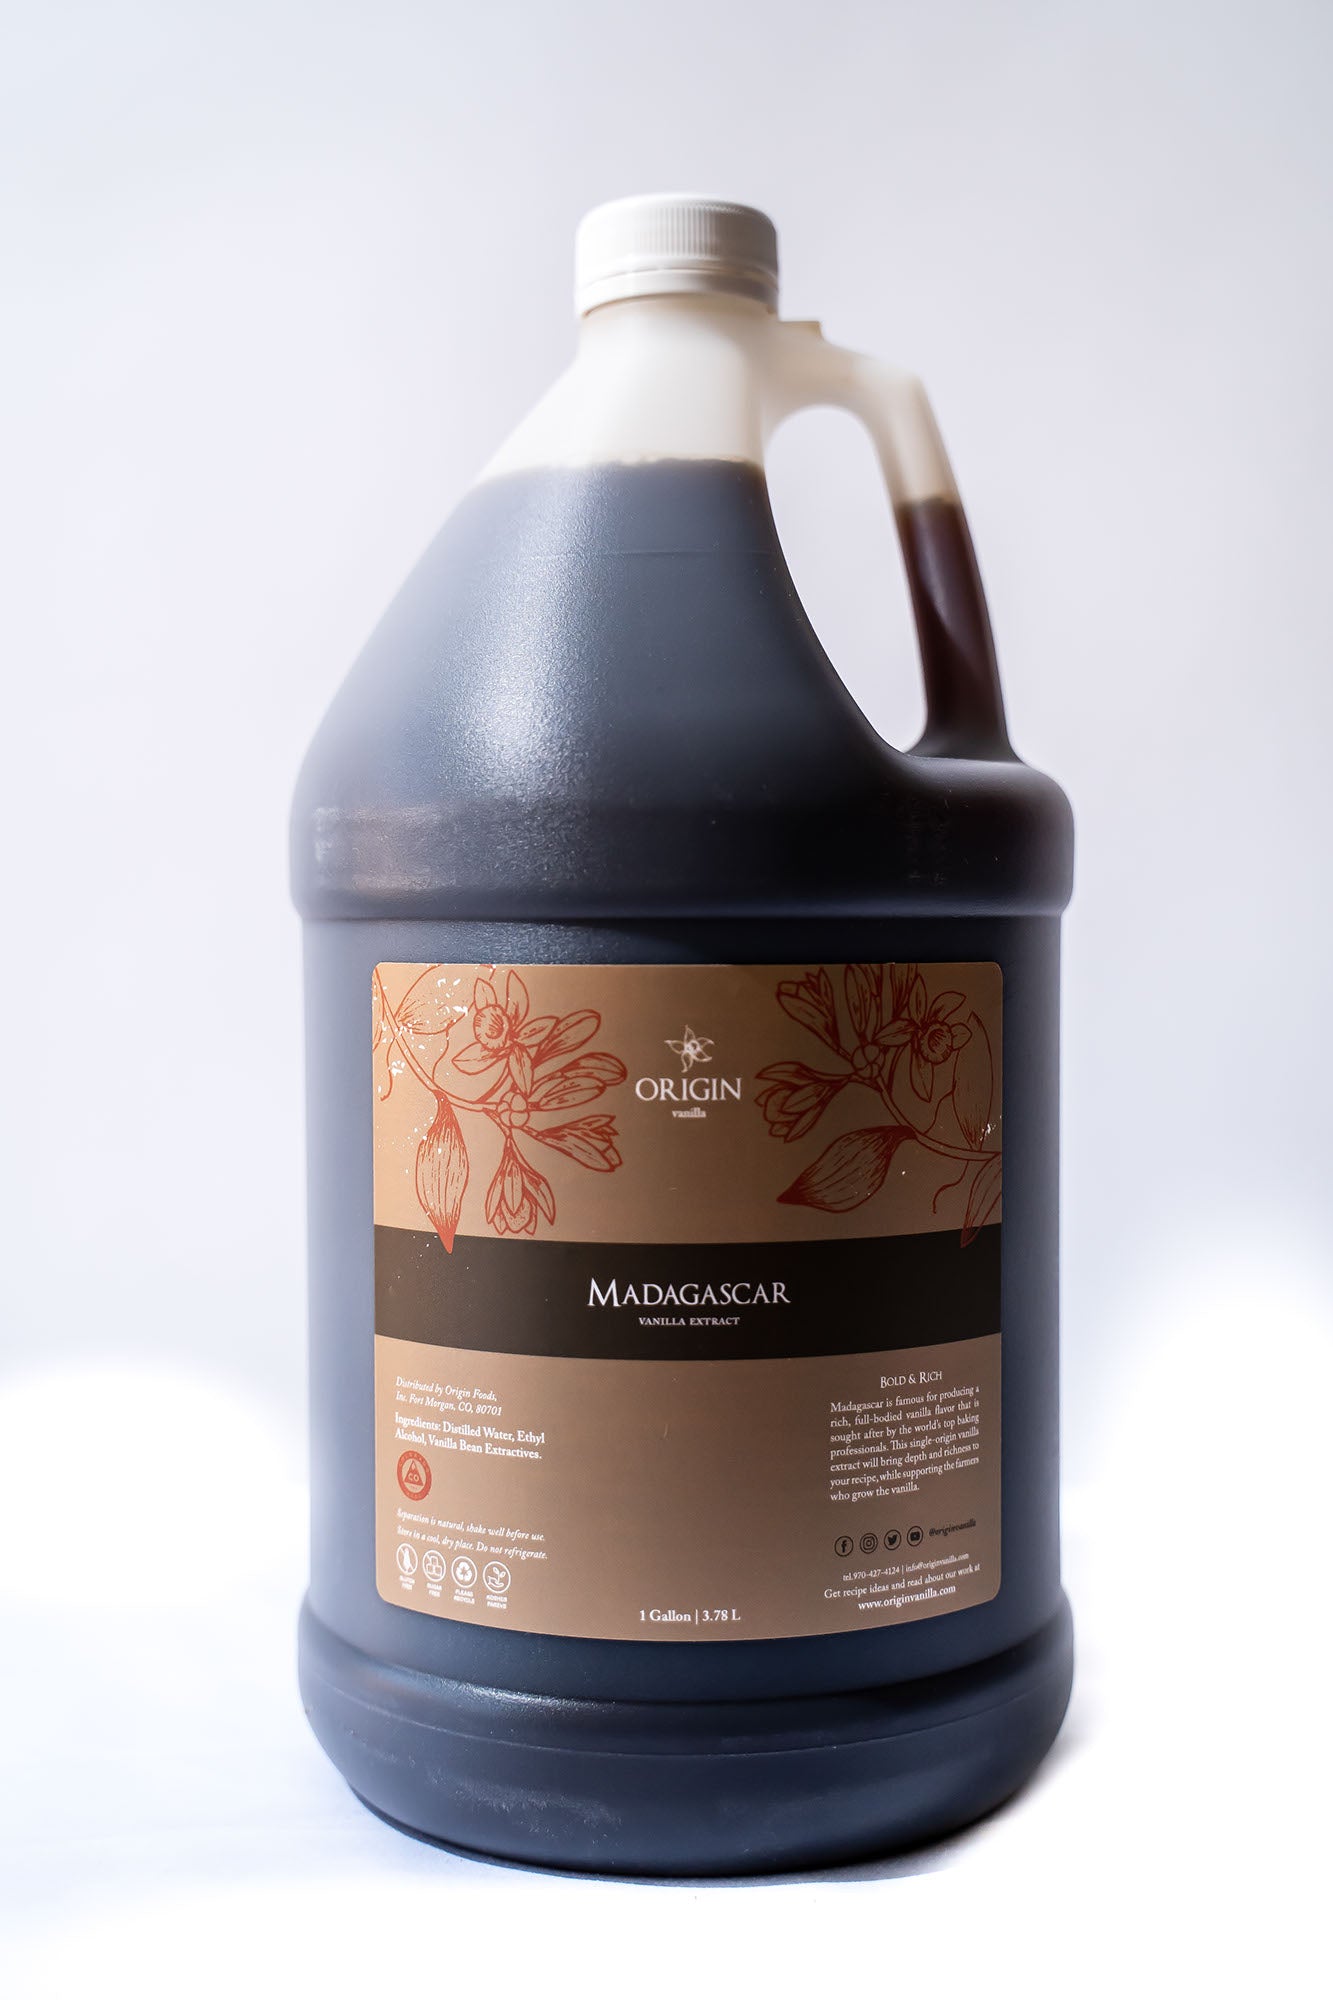 Madagascar Vanilla Extract - 1 Gallon - Origin Vanilla